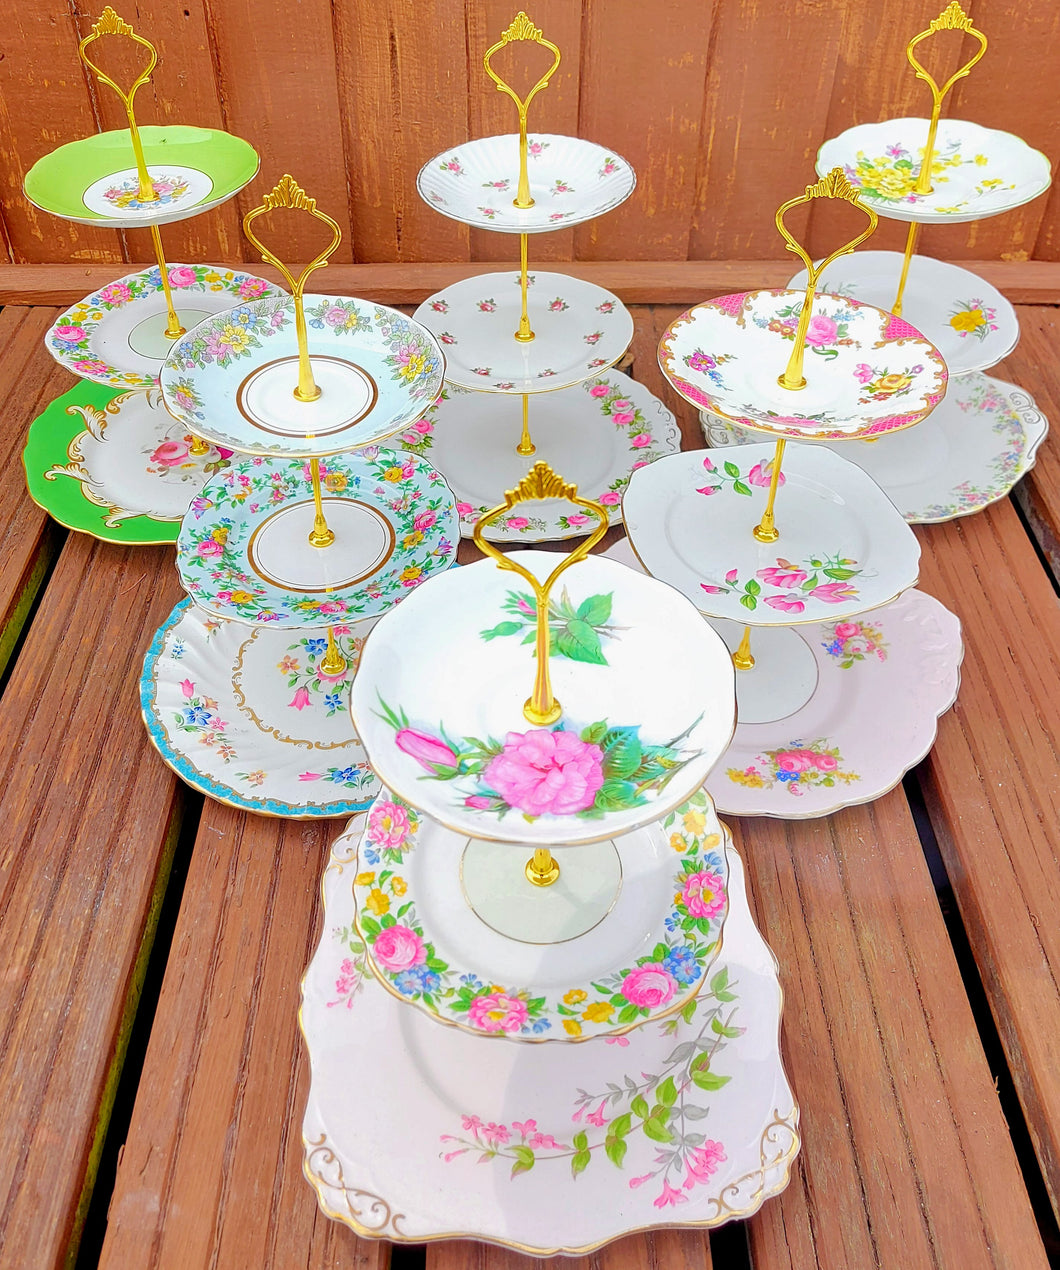 12 (36pcs) x Vintage 3 Tier Mismatched Floral Cake Stands, Afternoon Tea Party Wedding Crockery Bulk Plates Trays